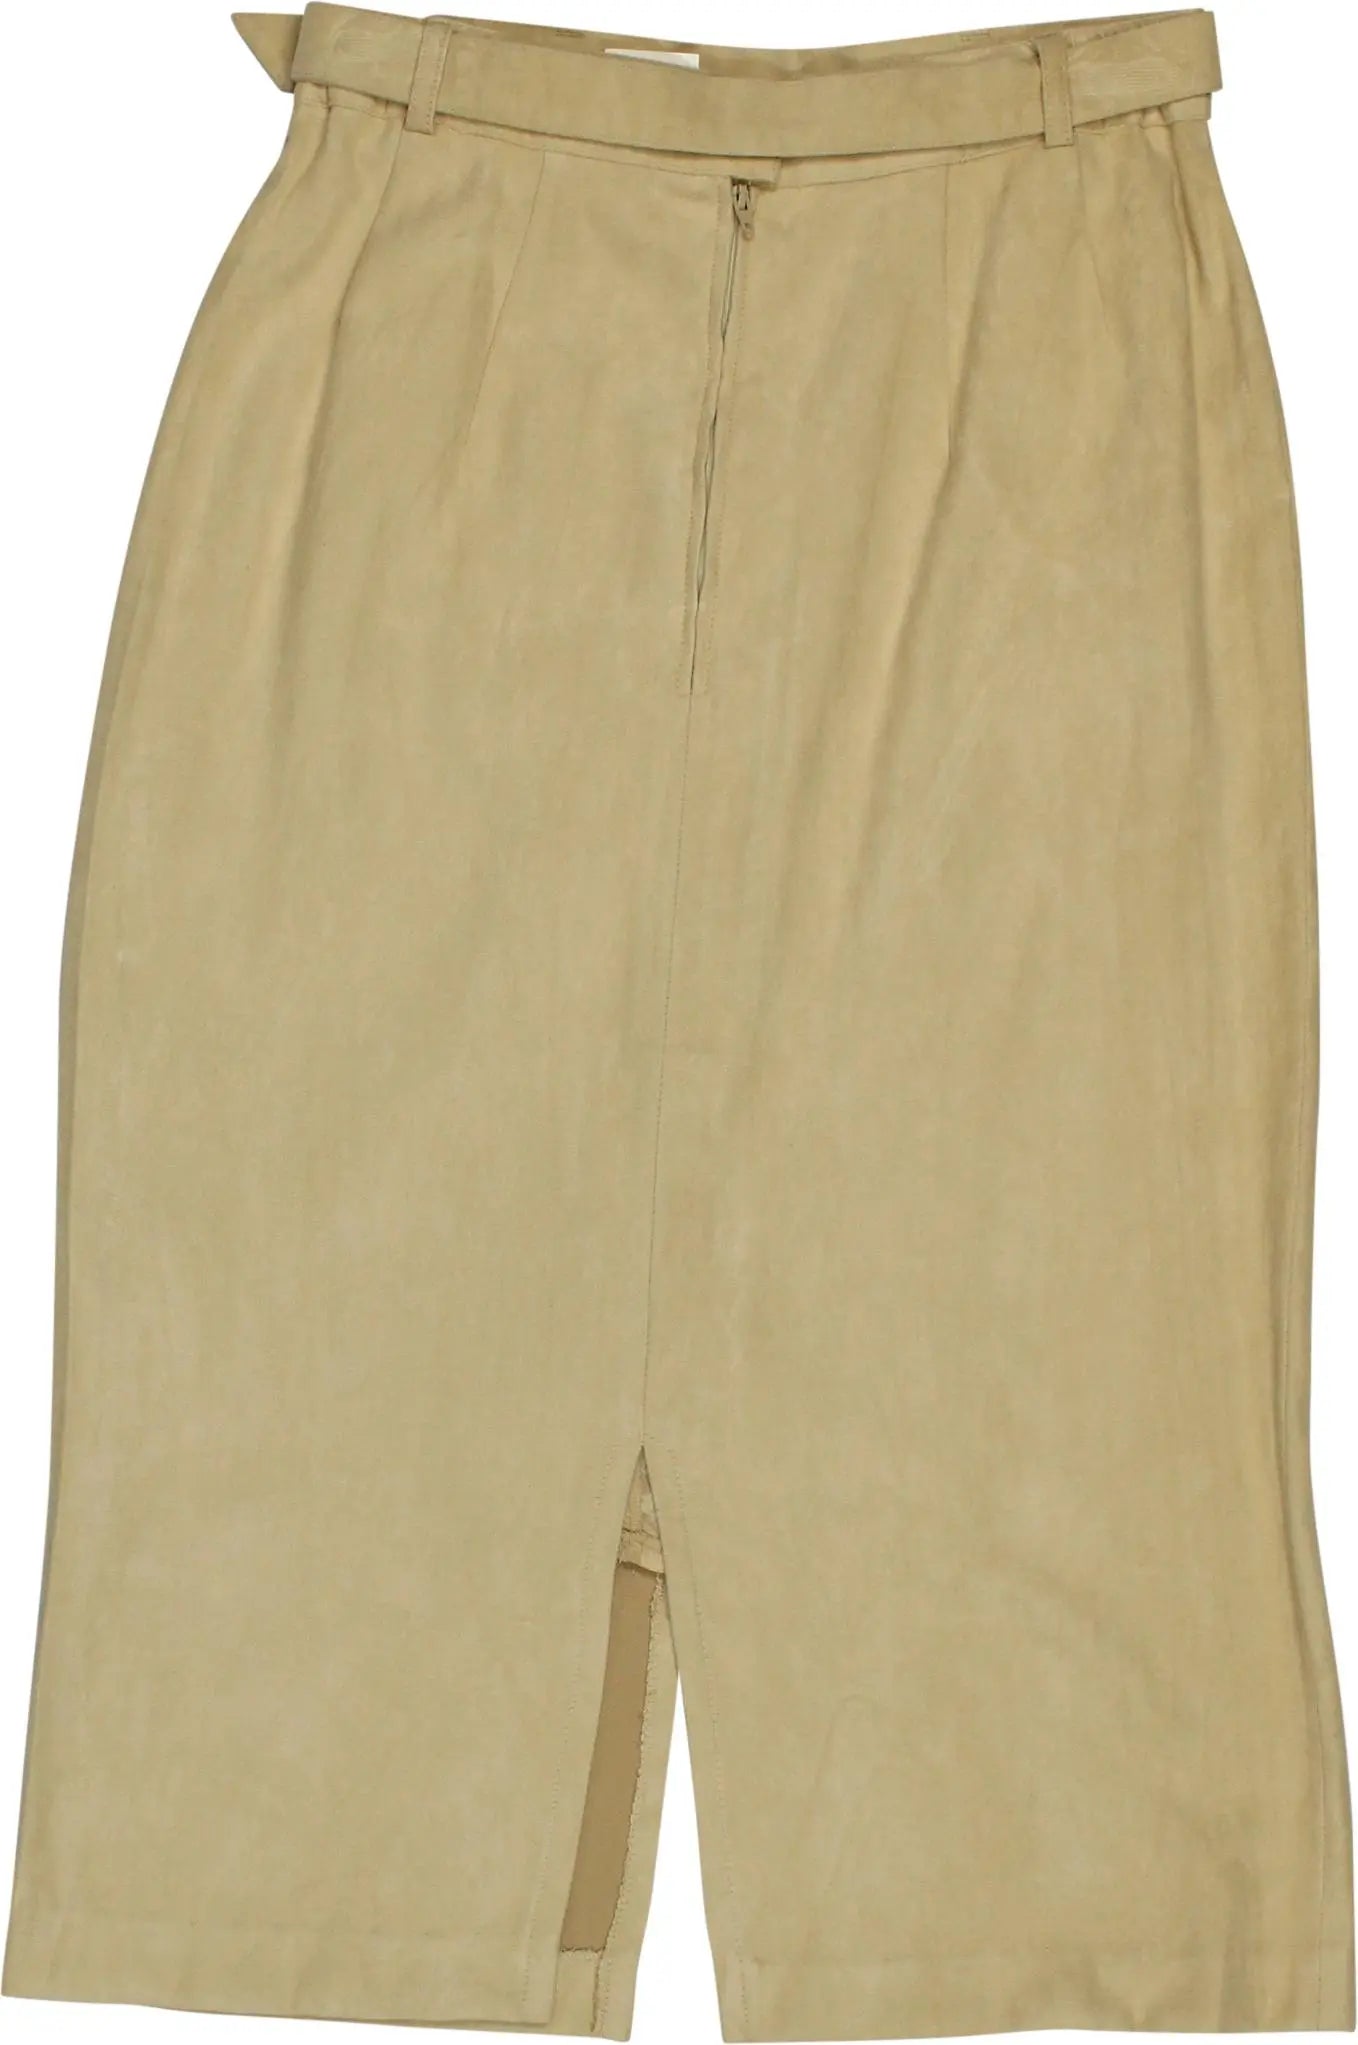 Miss Etam - Beige pencil skirt- ThriftTale.com - Vintage and second handclothing